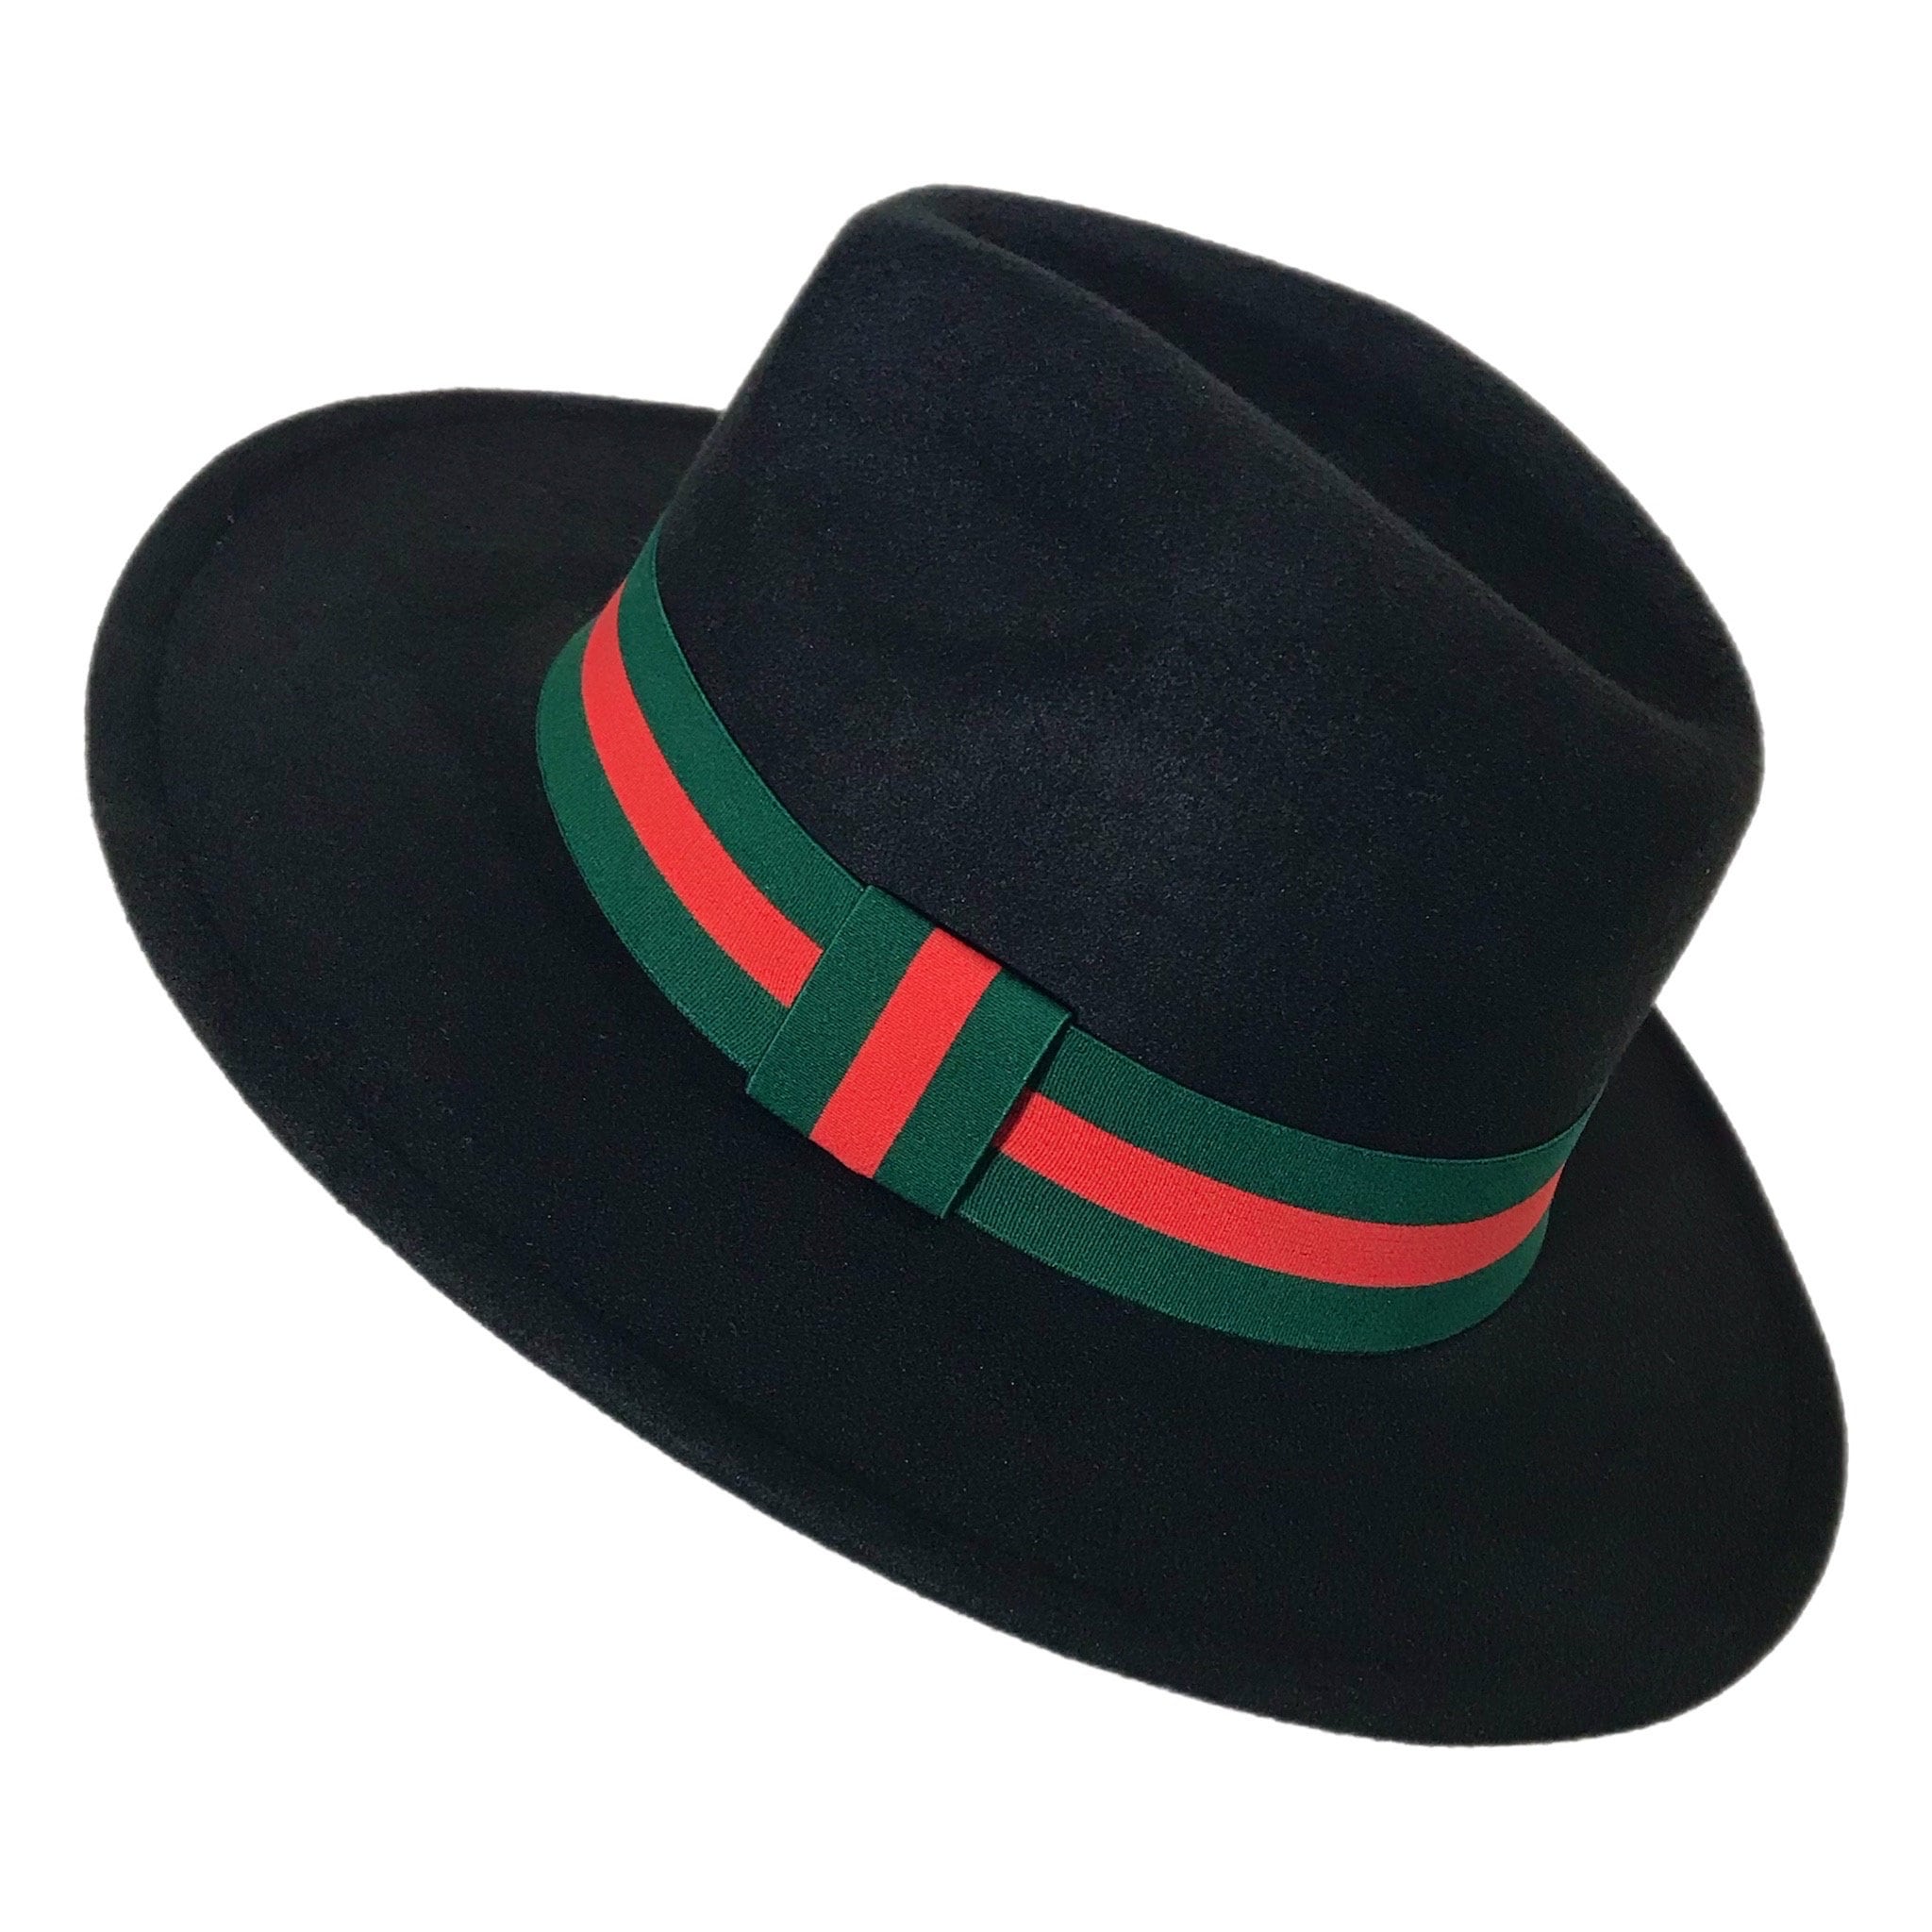 Black Gucci Hat 